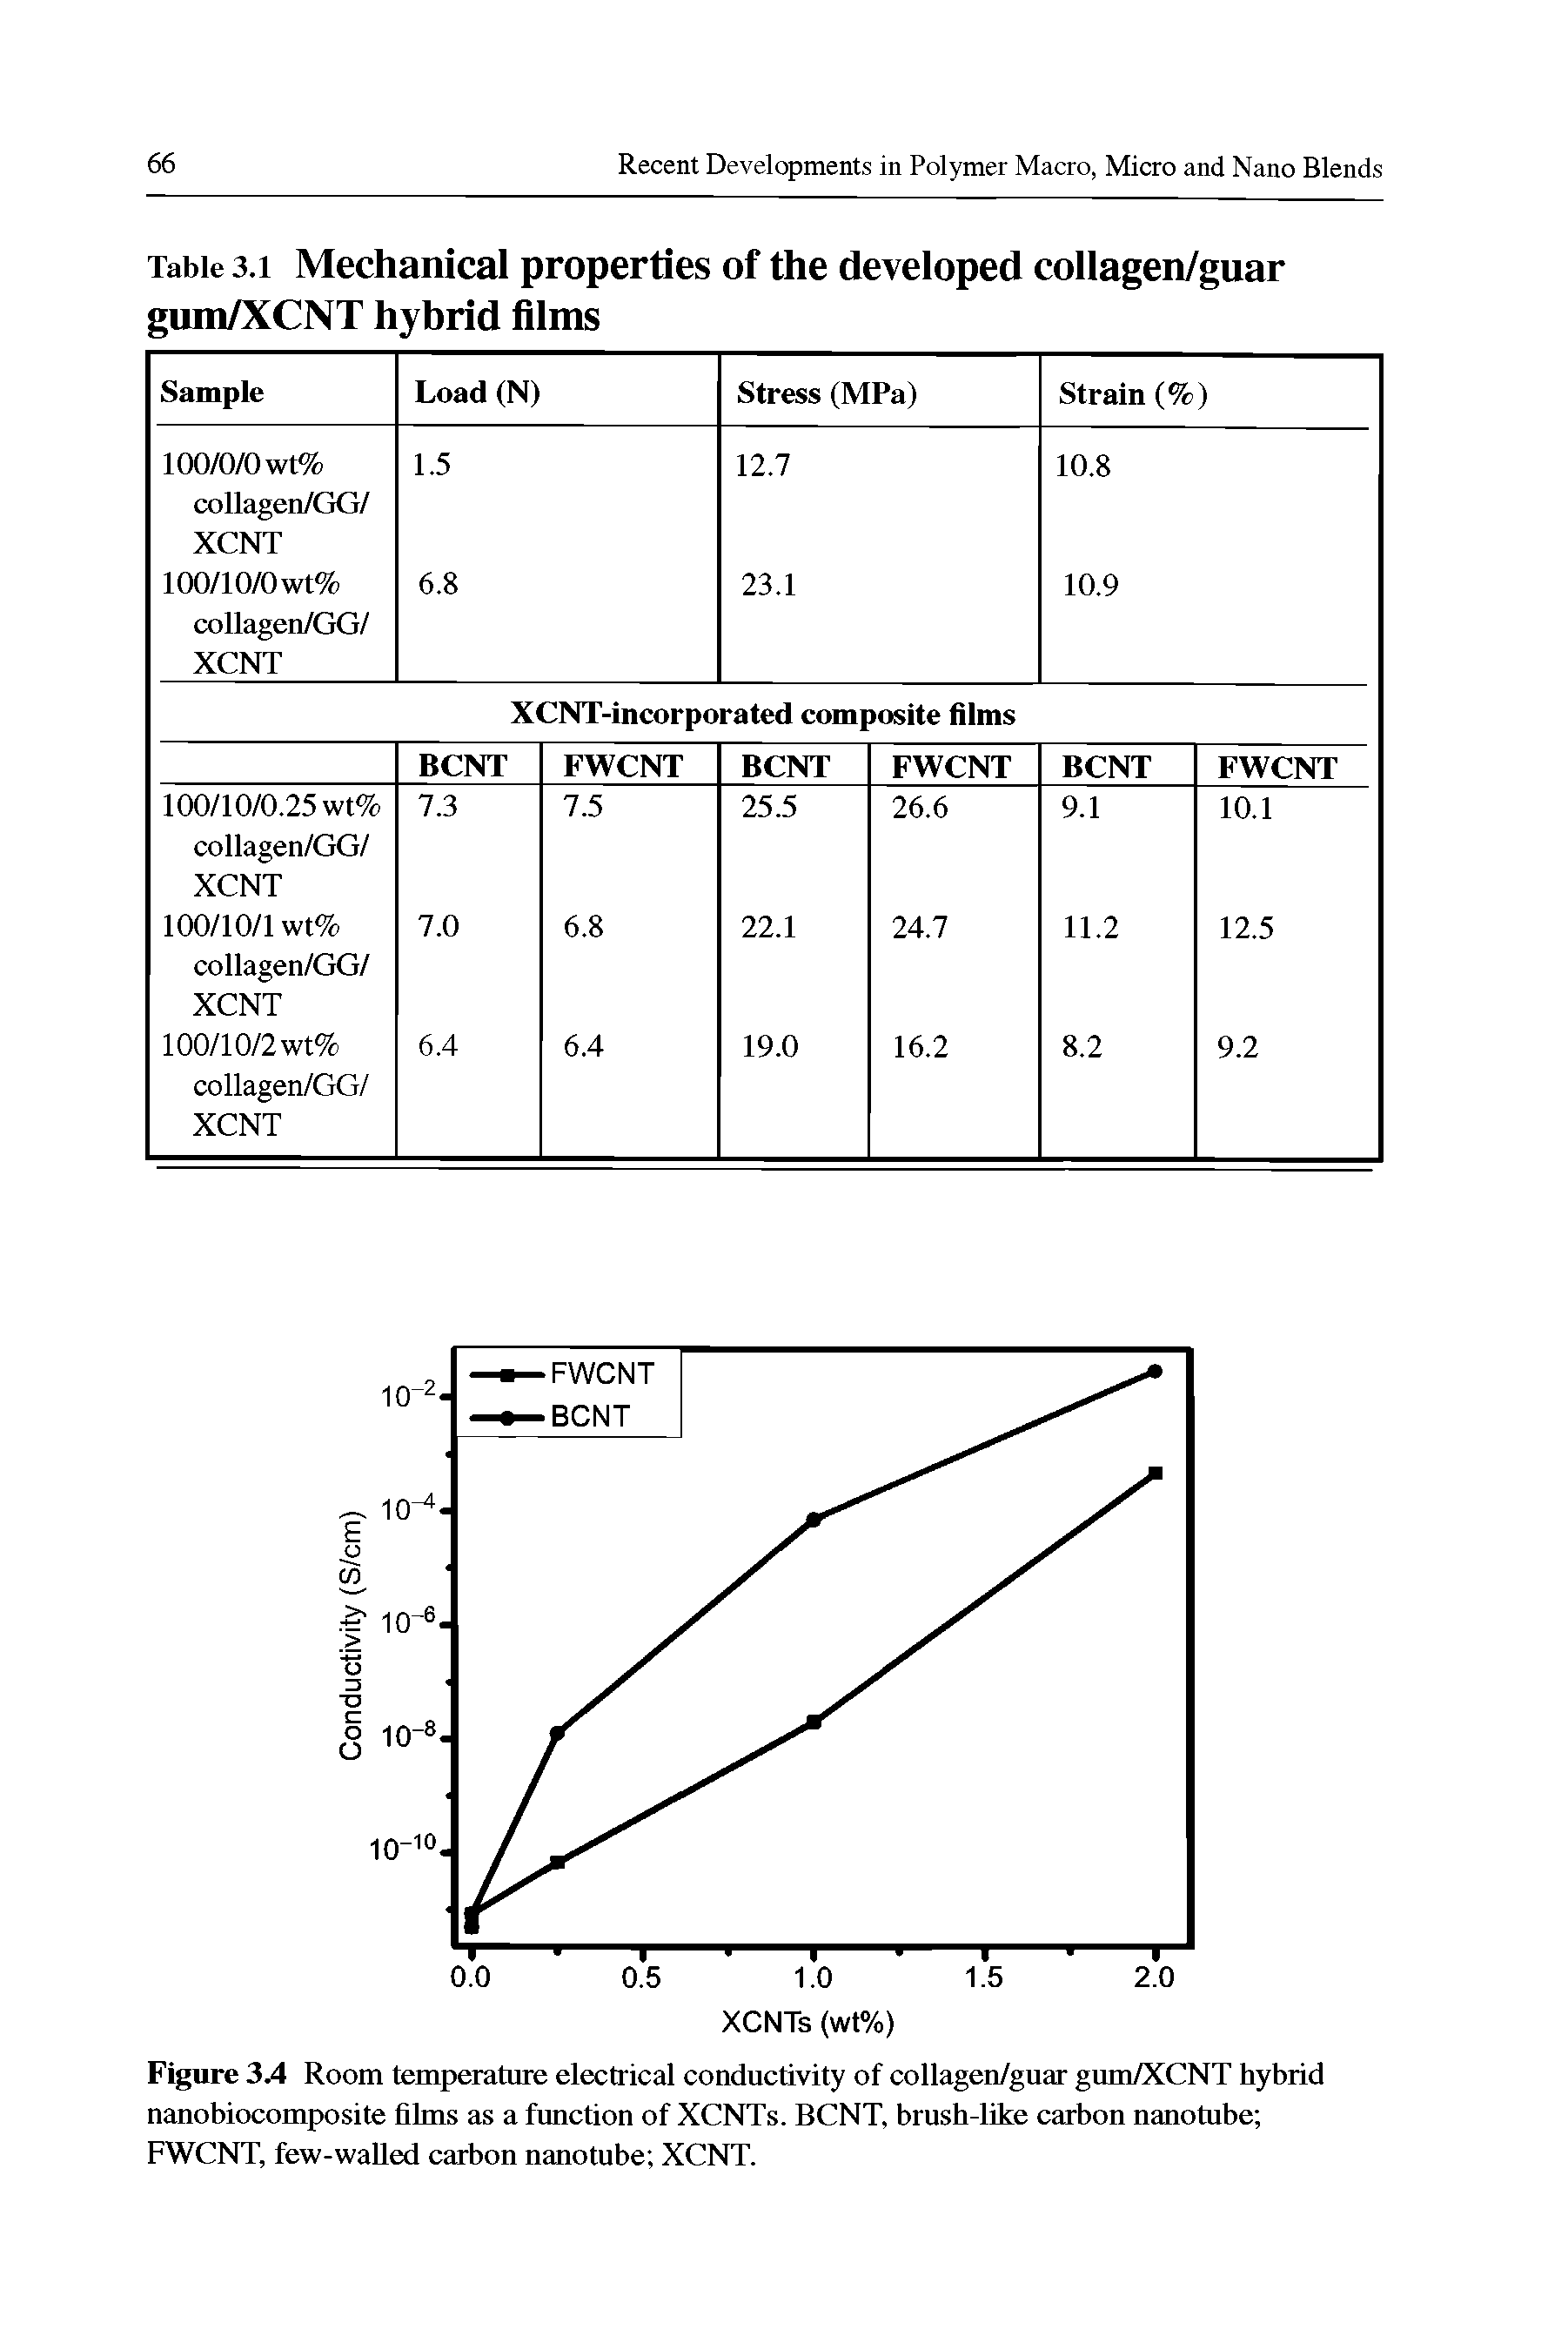 Figure 3.4 Room temperature electrical conductivity of collagen/guar gum/XCNT hybrid nanobiocomposite films as a function of XCNTs. BCNT, brush-like carbon nanombe FWCNT, few-waUed carbon nanotube XCNT.